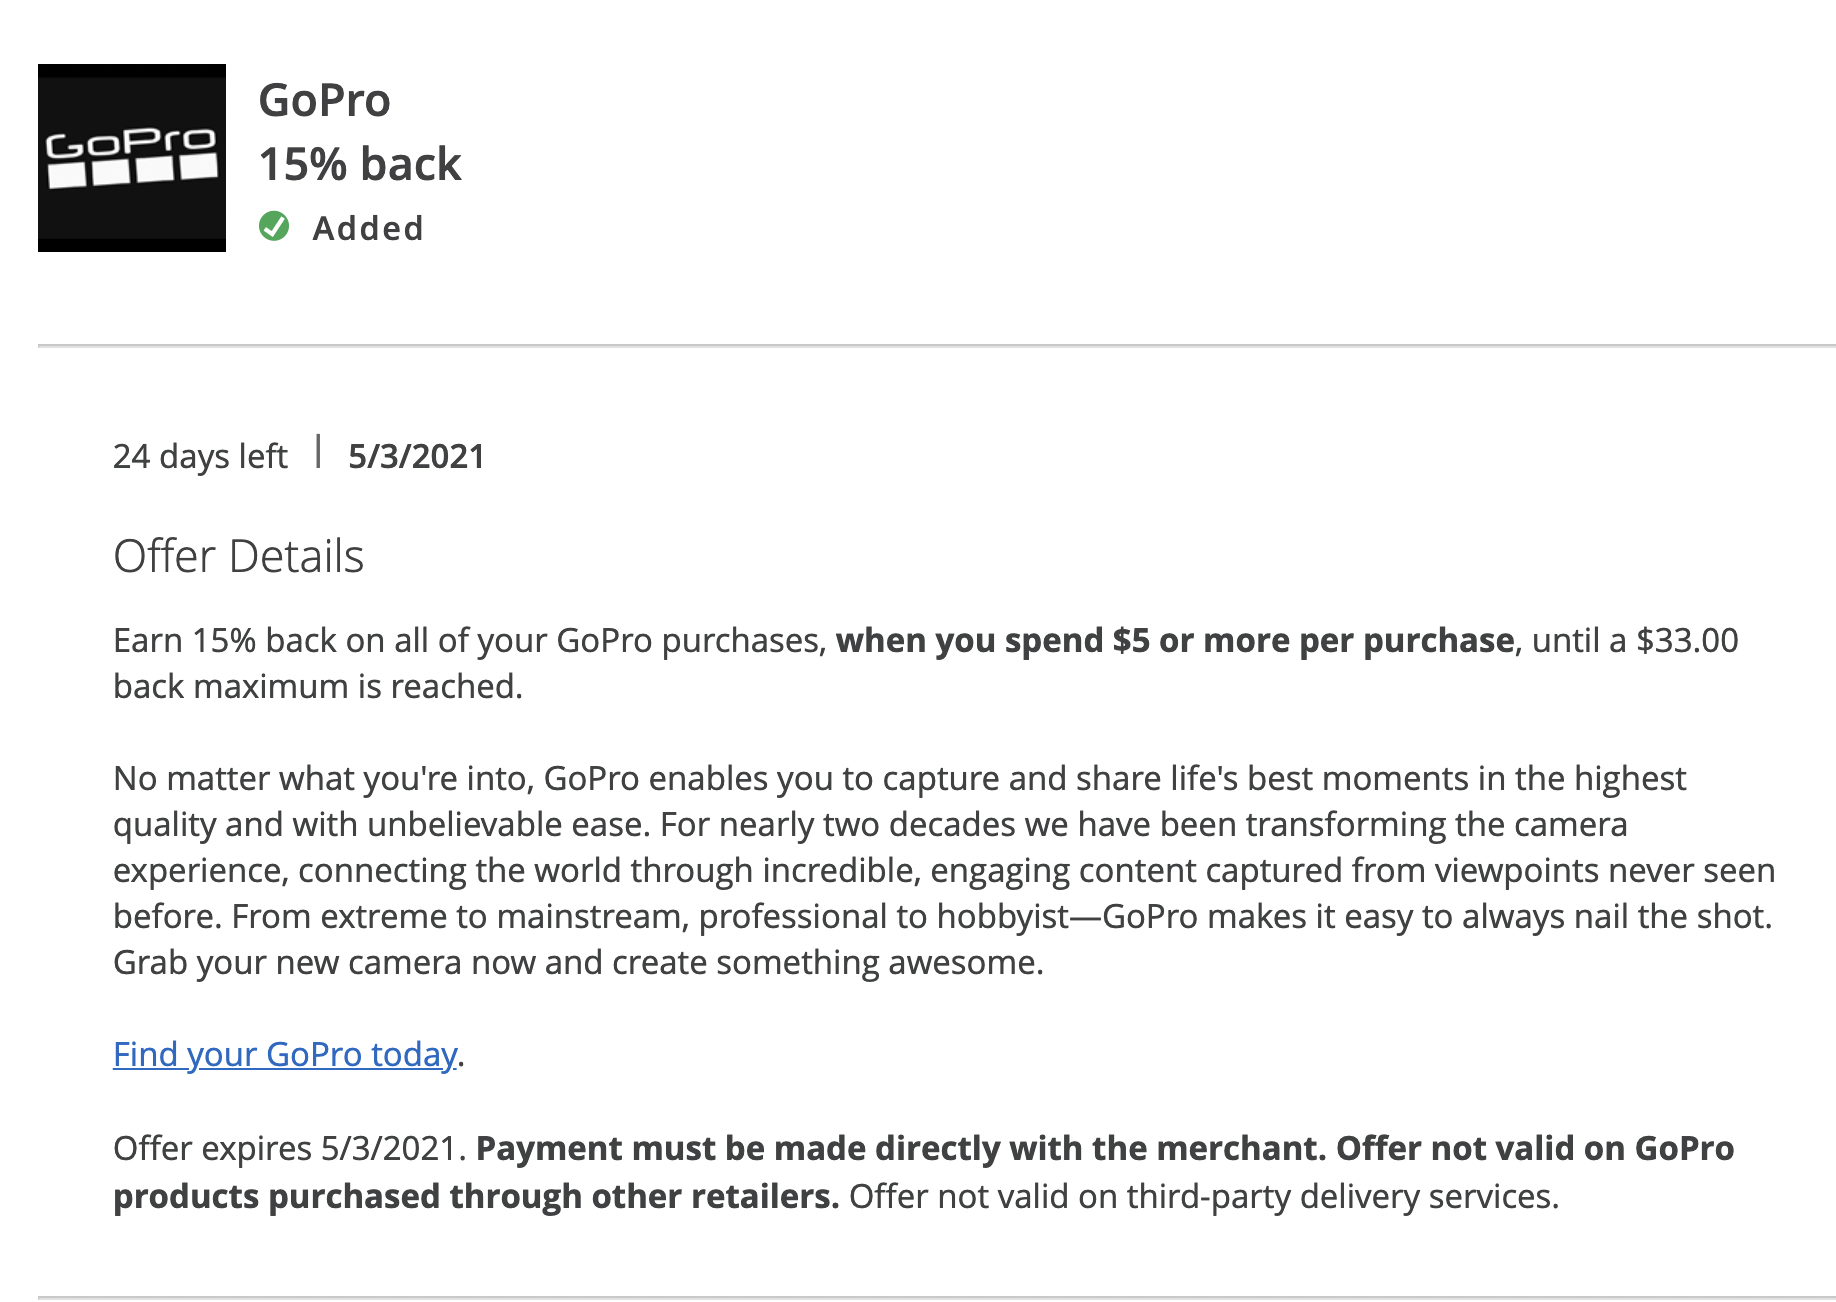 GoPro Purchase 15% Back through Chase Offers. $33.00 back maximum.